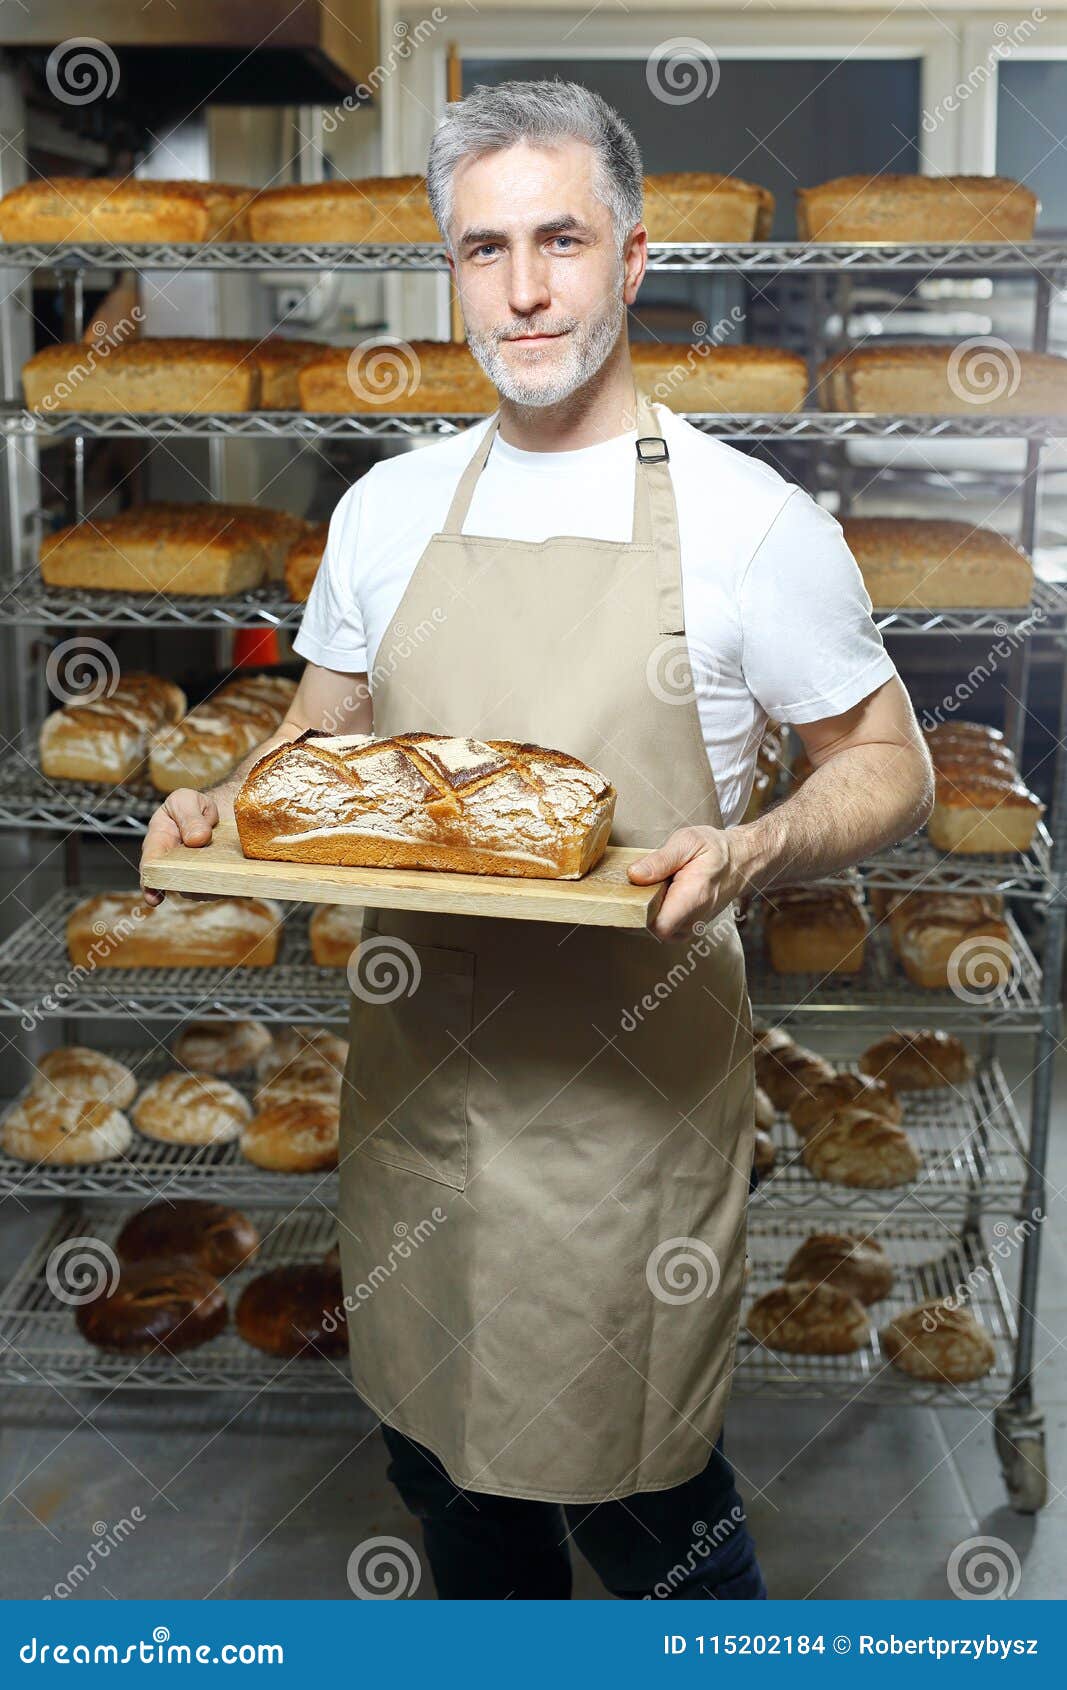 the bread baker